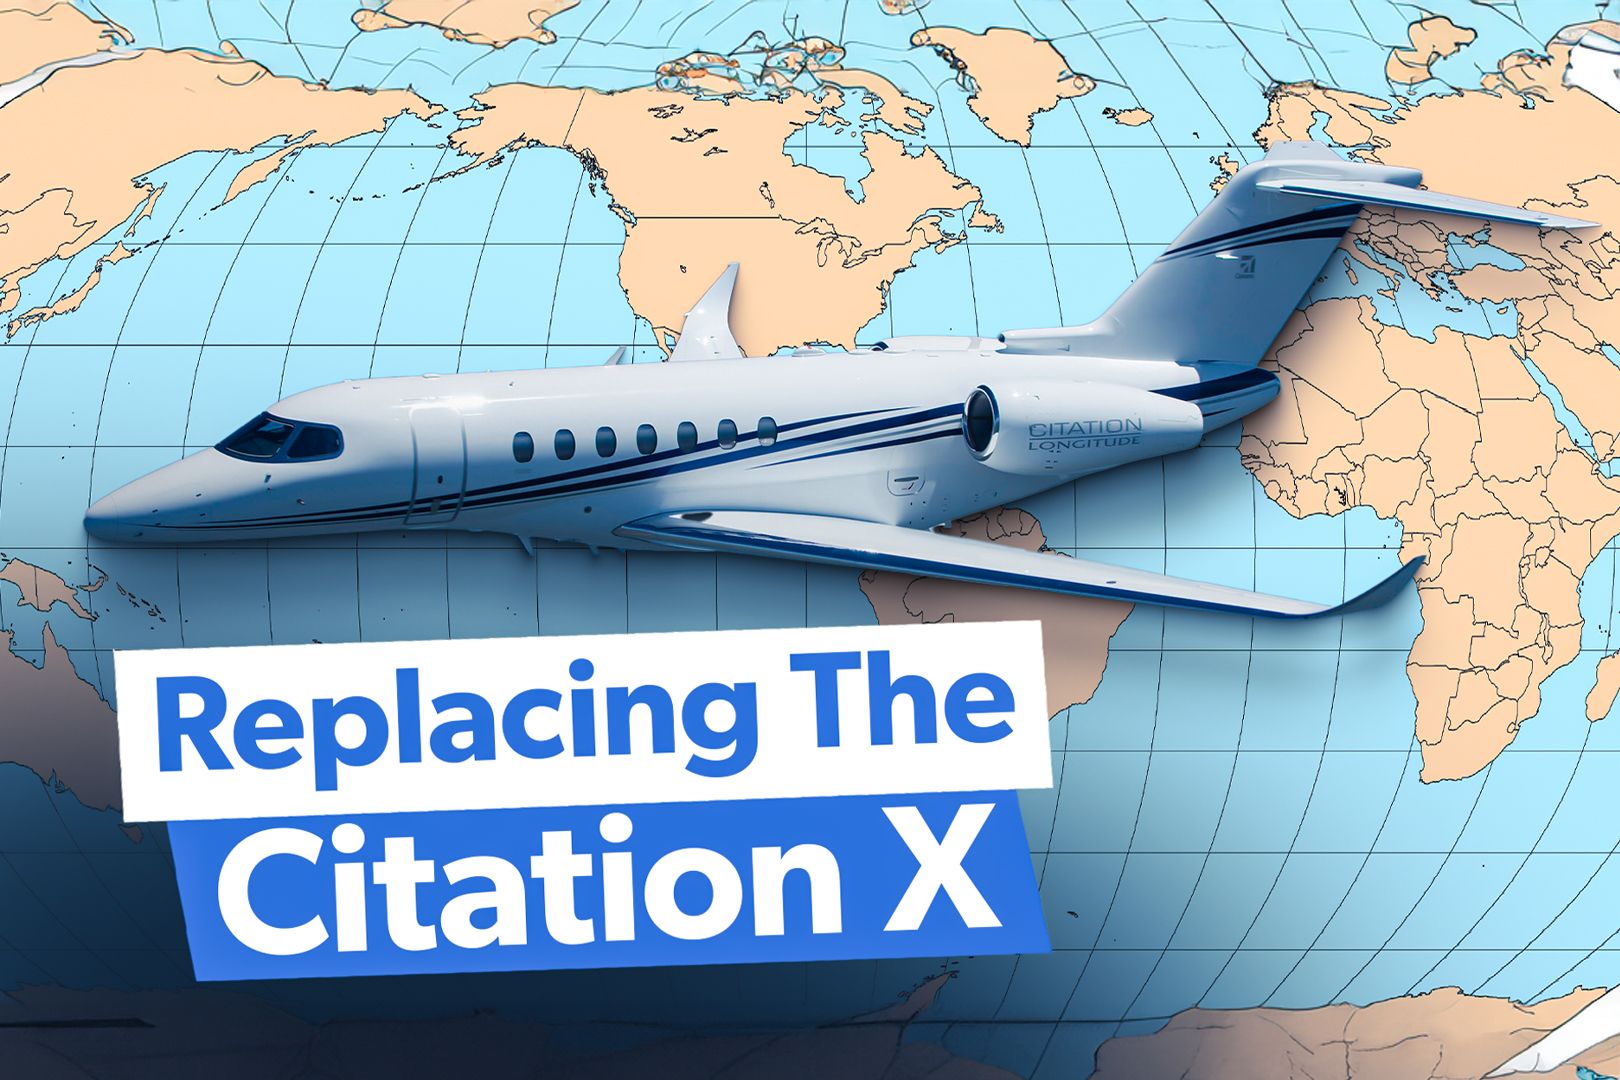 Citation X replacement